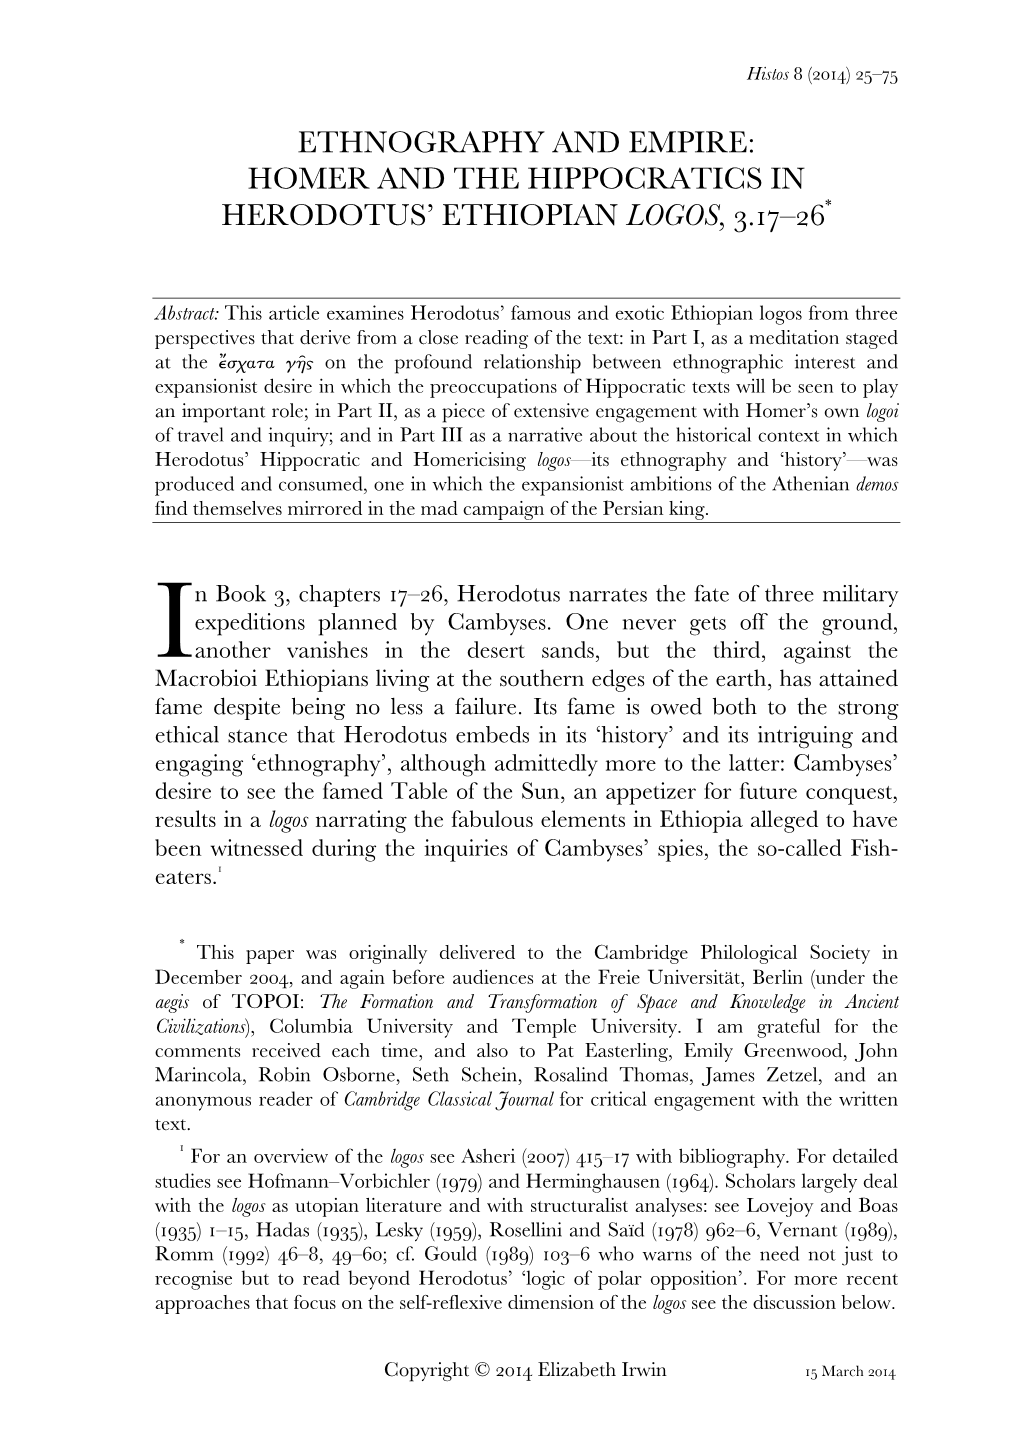 Homer and the Hippocratics in Herodotus' Ethiopian Logos